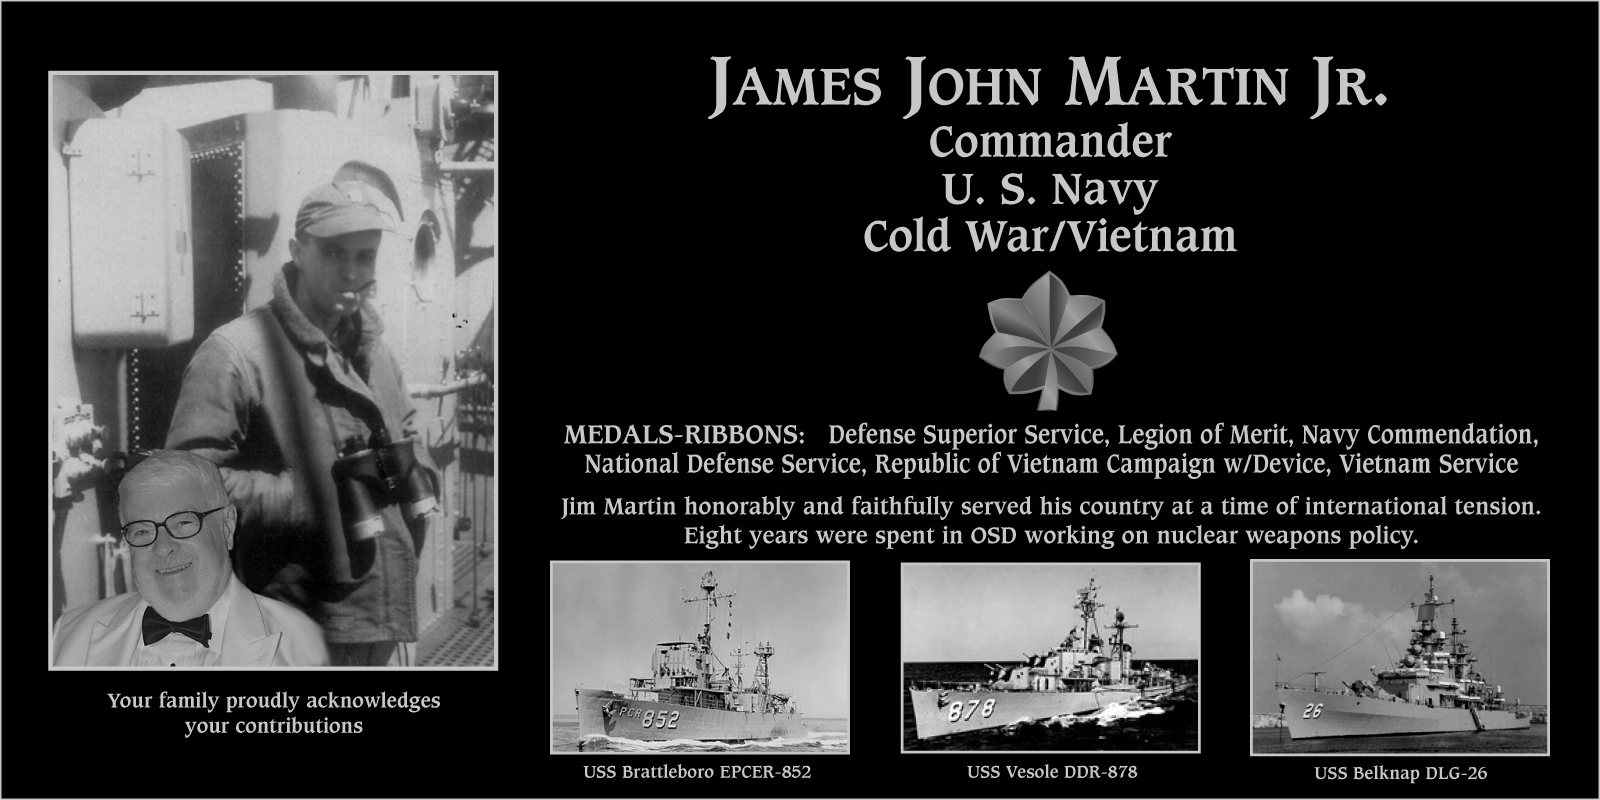 James John Martin jr